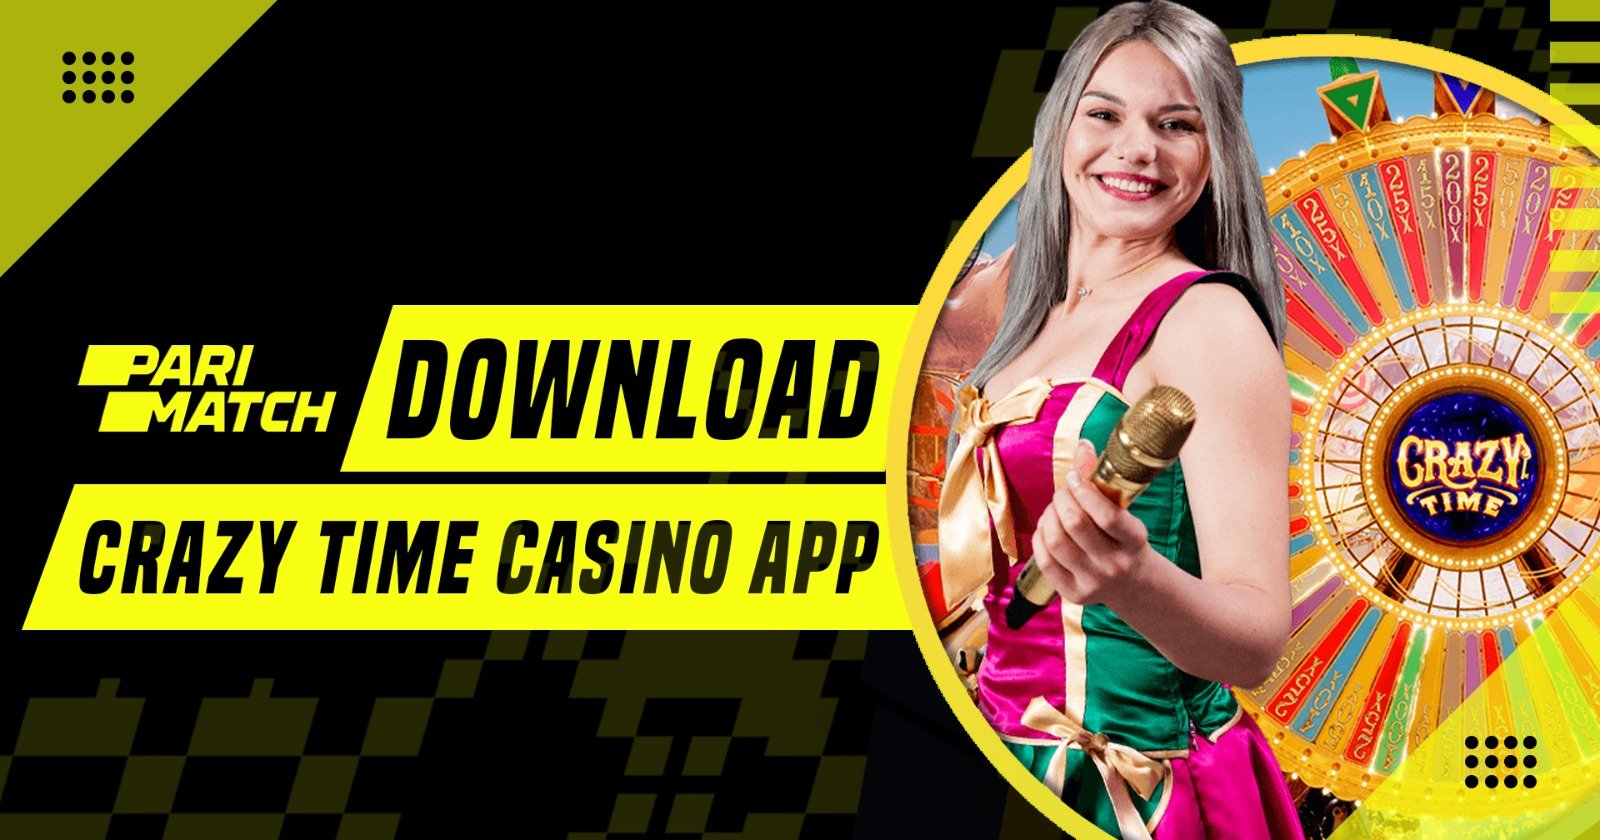 Download Crazy Time Casino App parimatch